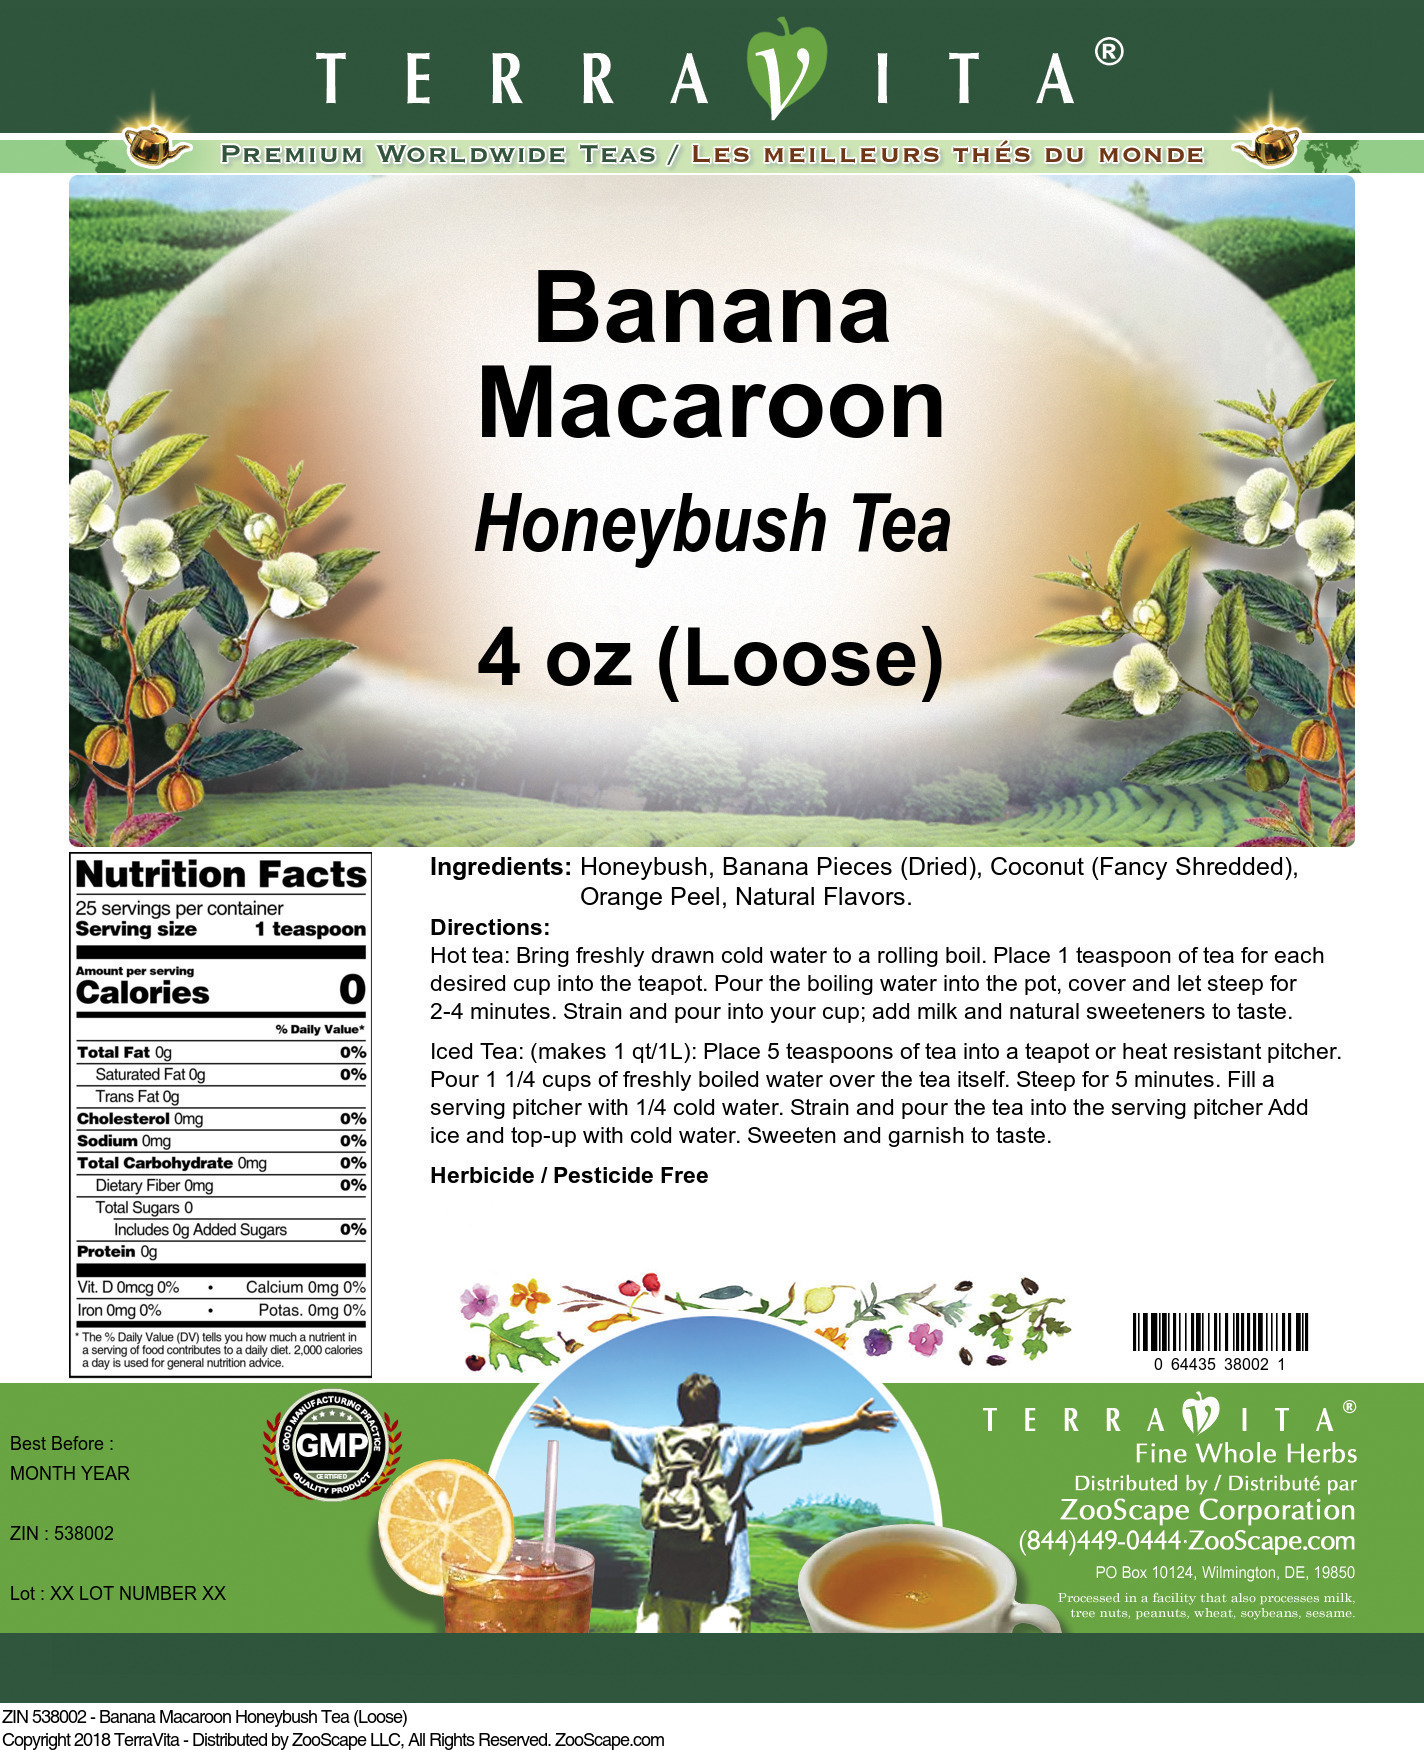 Banana Macaroon Honeybush Tea (Loose) - Label